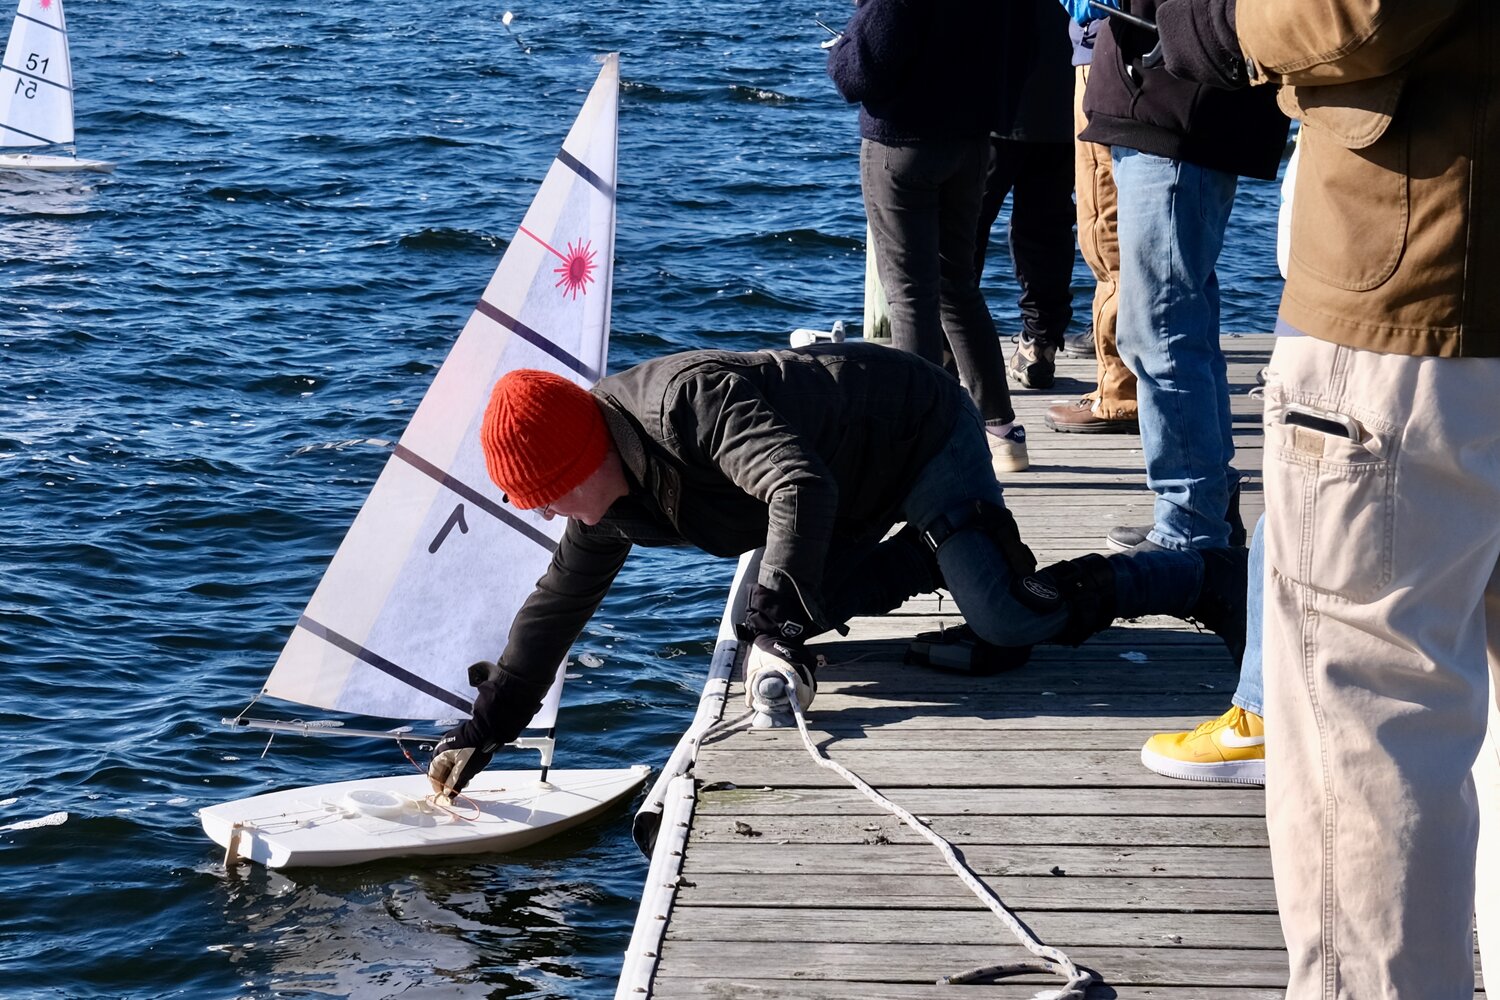 Matt Asaro makes an adjustment to his boat between races.